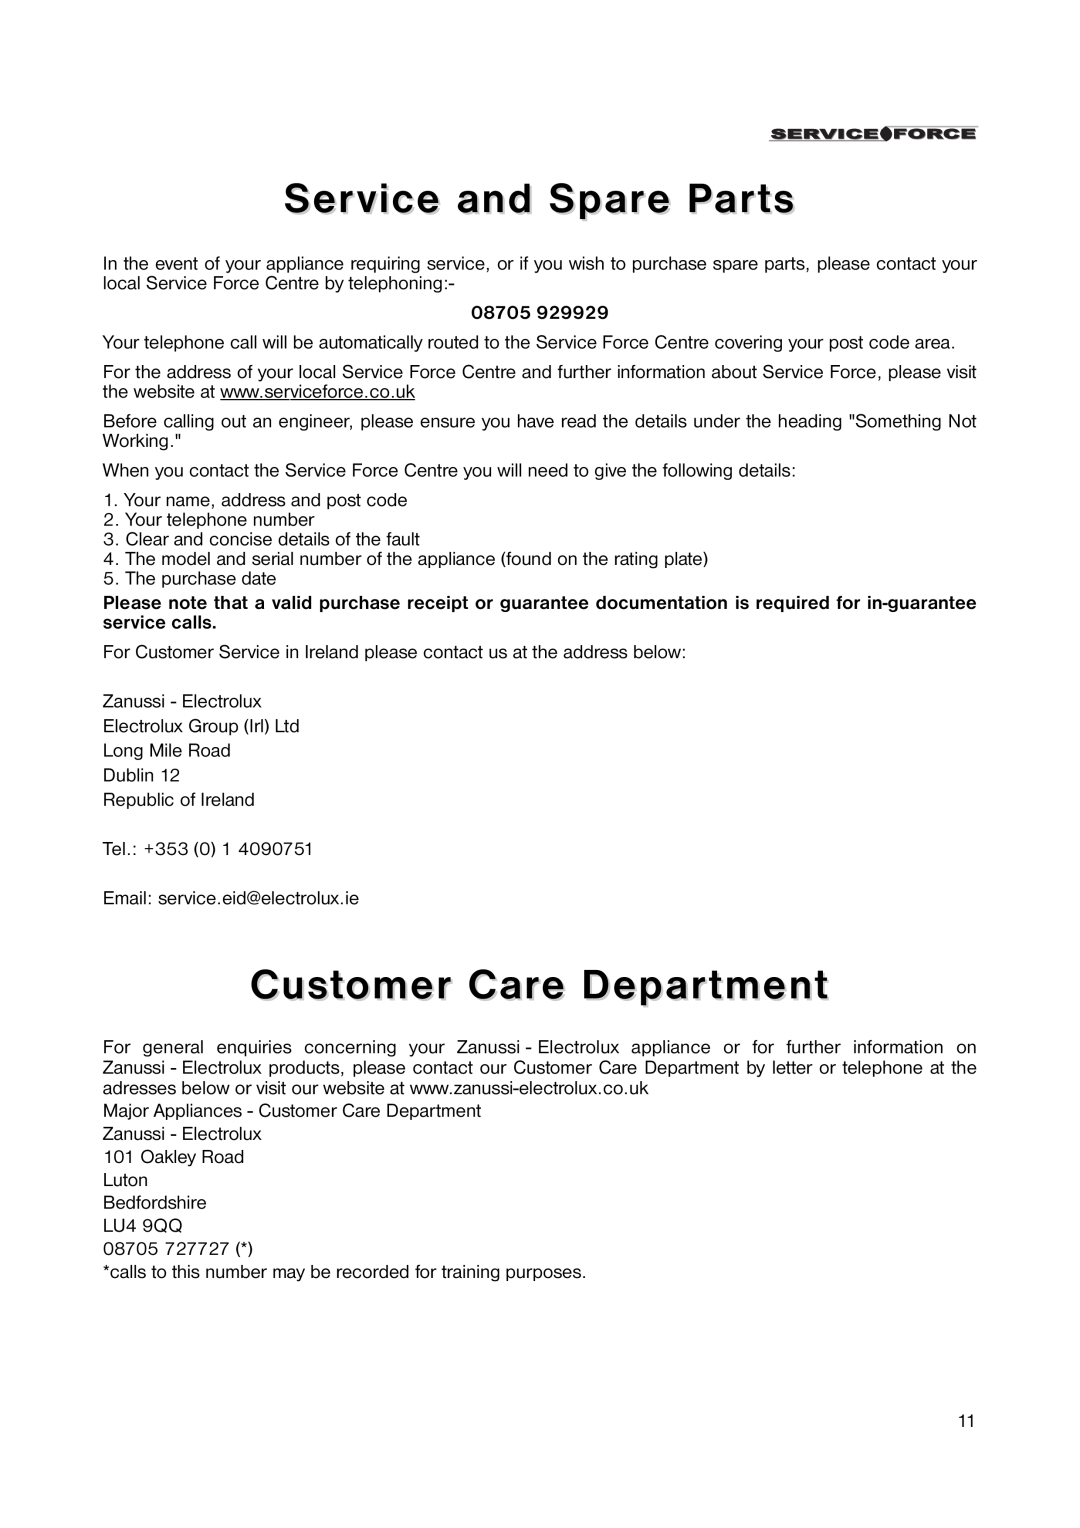 Zanussi ZUT 6246 manual Service and Spare Parts, Customer Care Department, 08705 